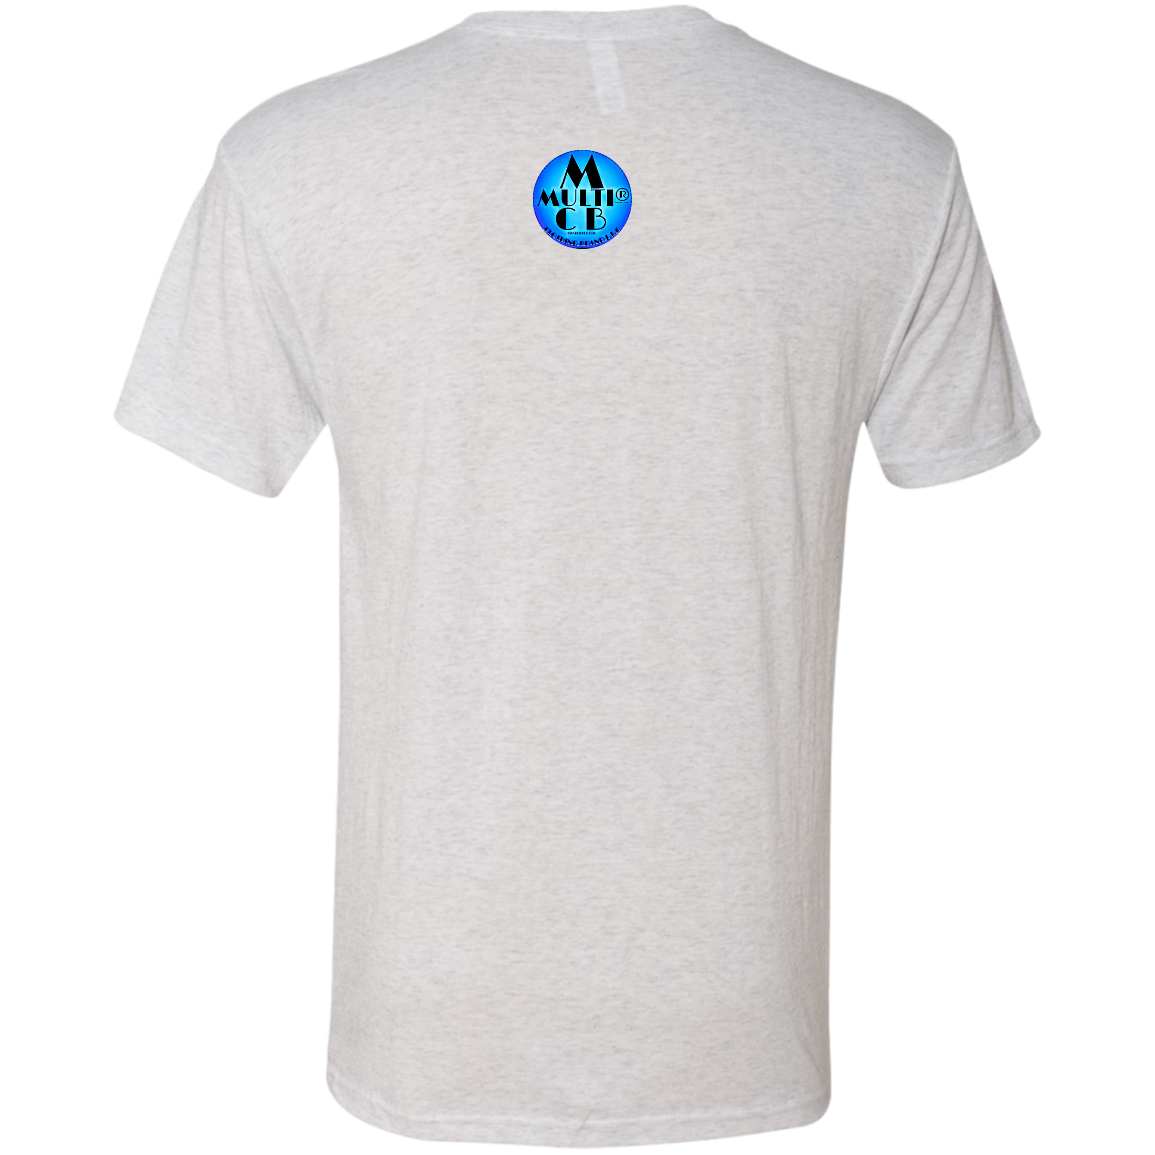 Unite One - Men's - TB T-Shirt